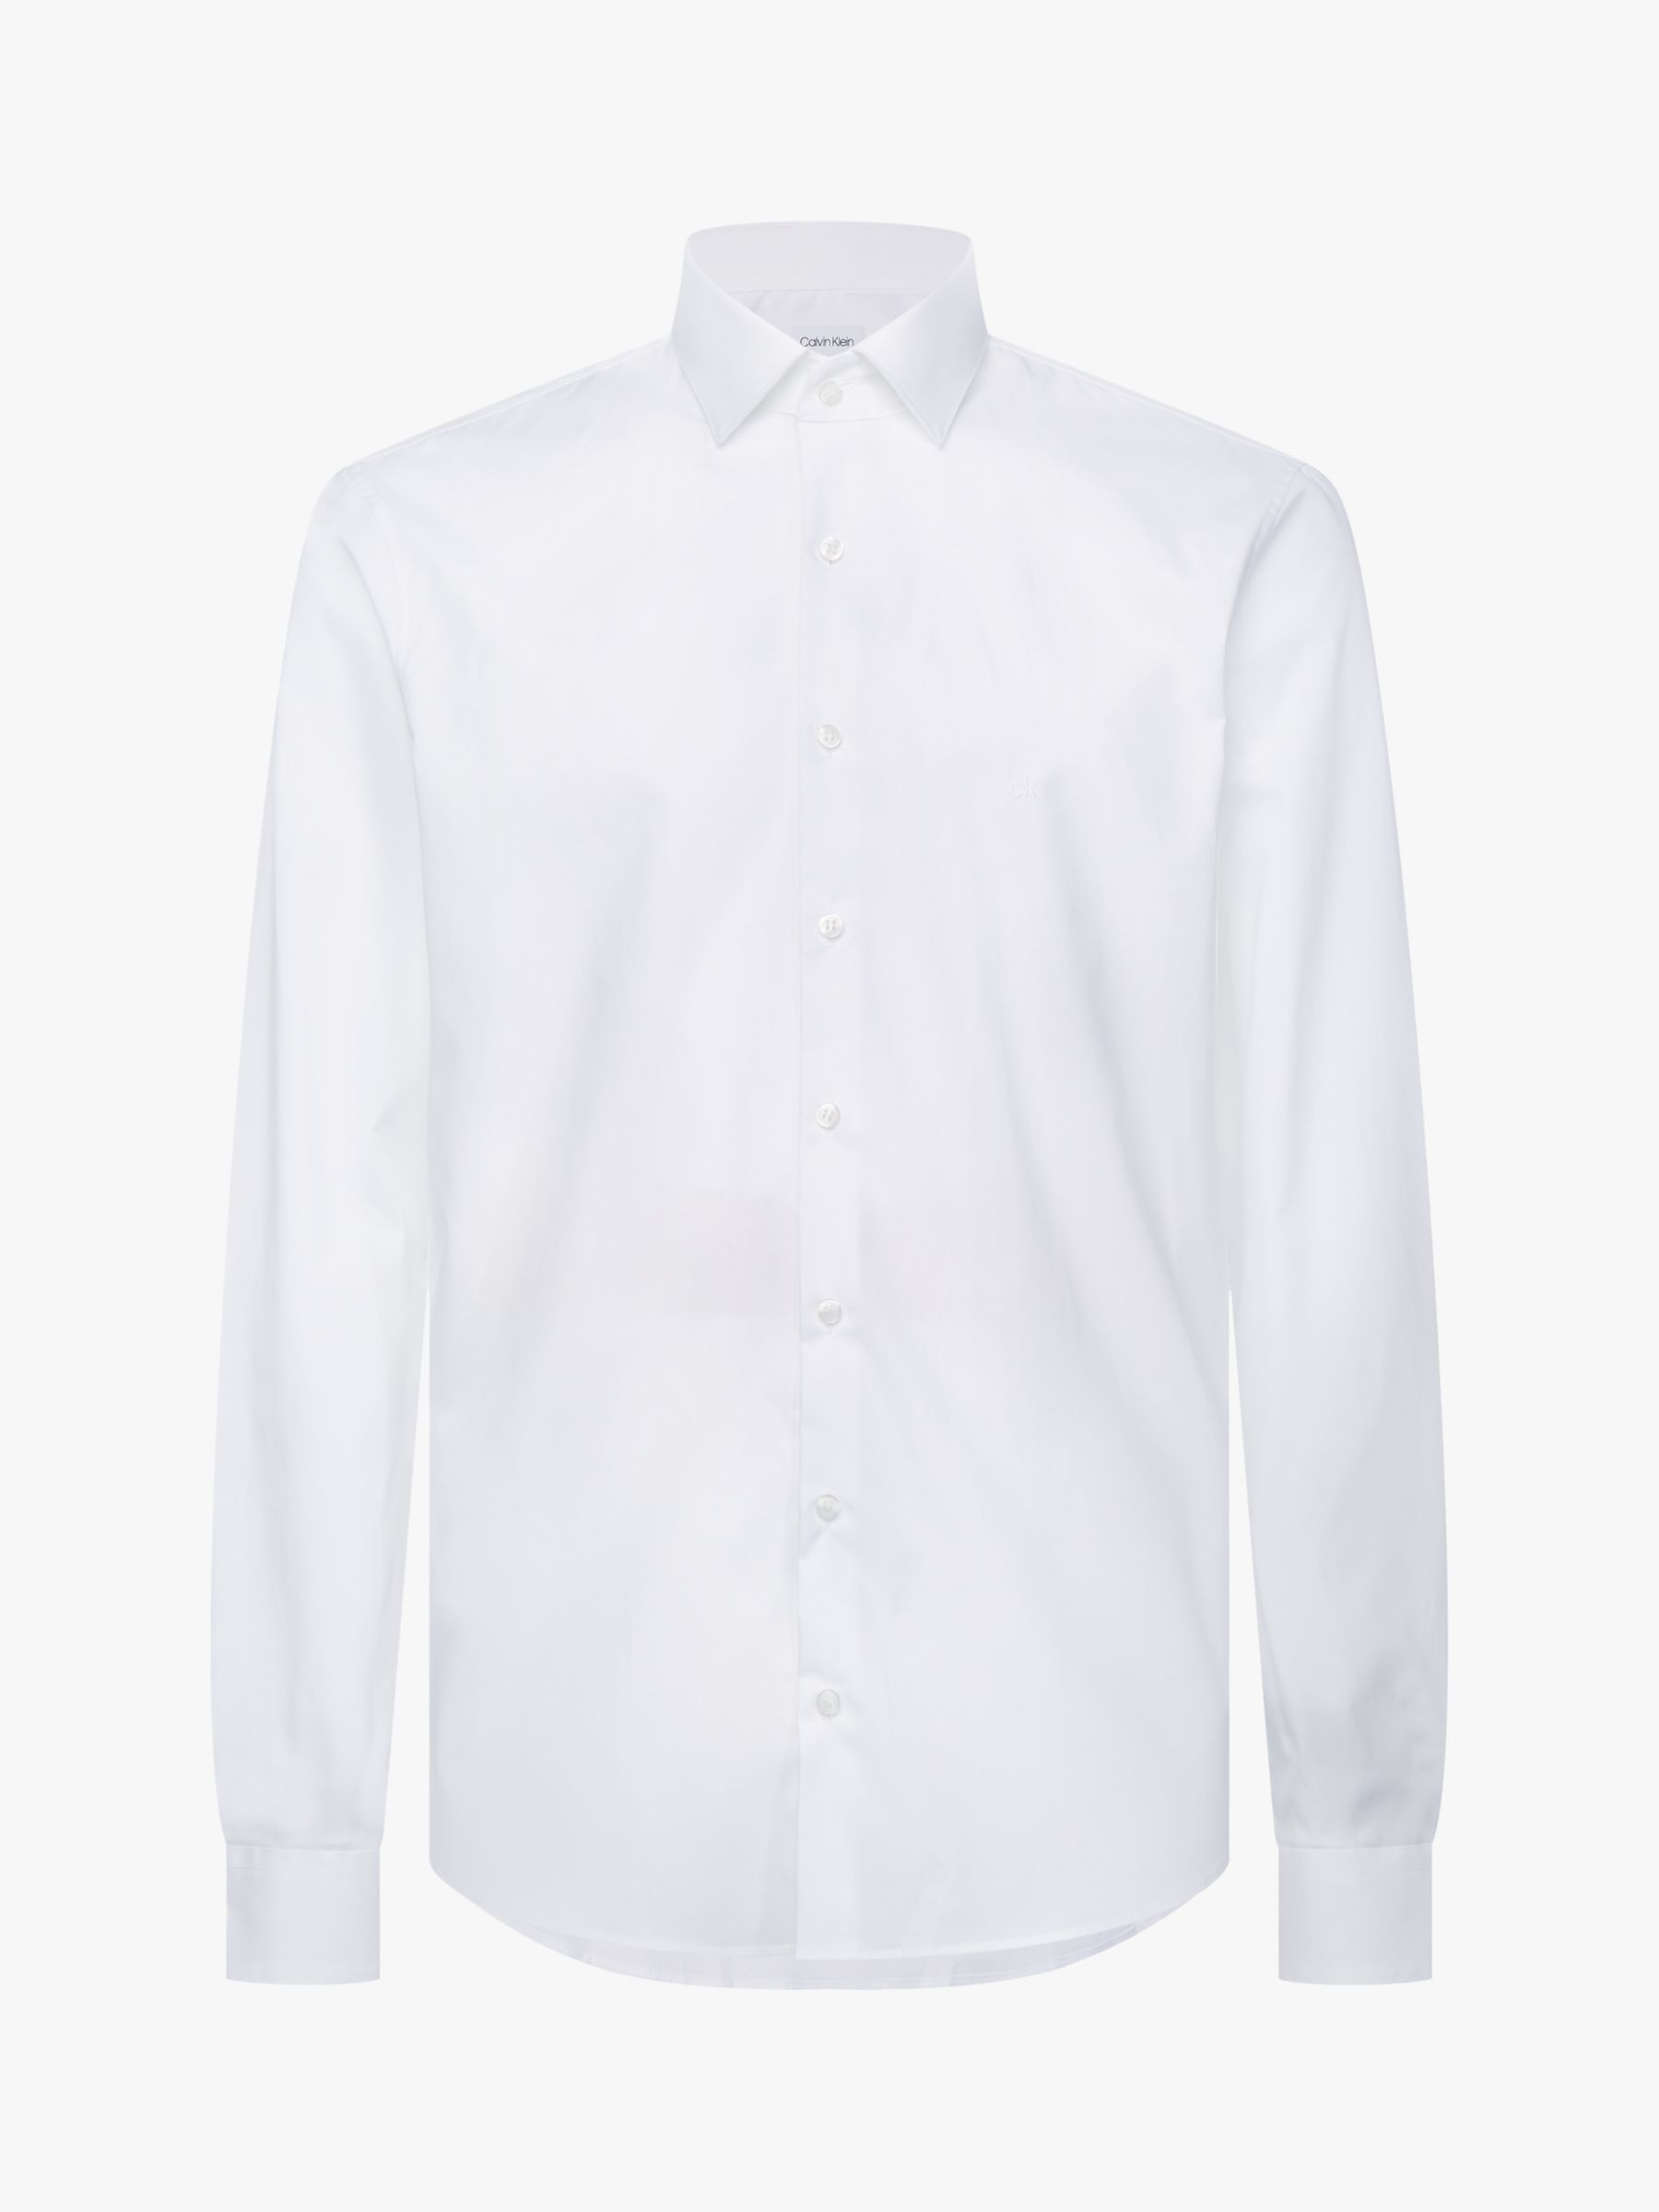 Calvin Klein Poplin Slim Fit Shirt, White at John Lewis & Partners